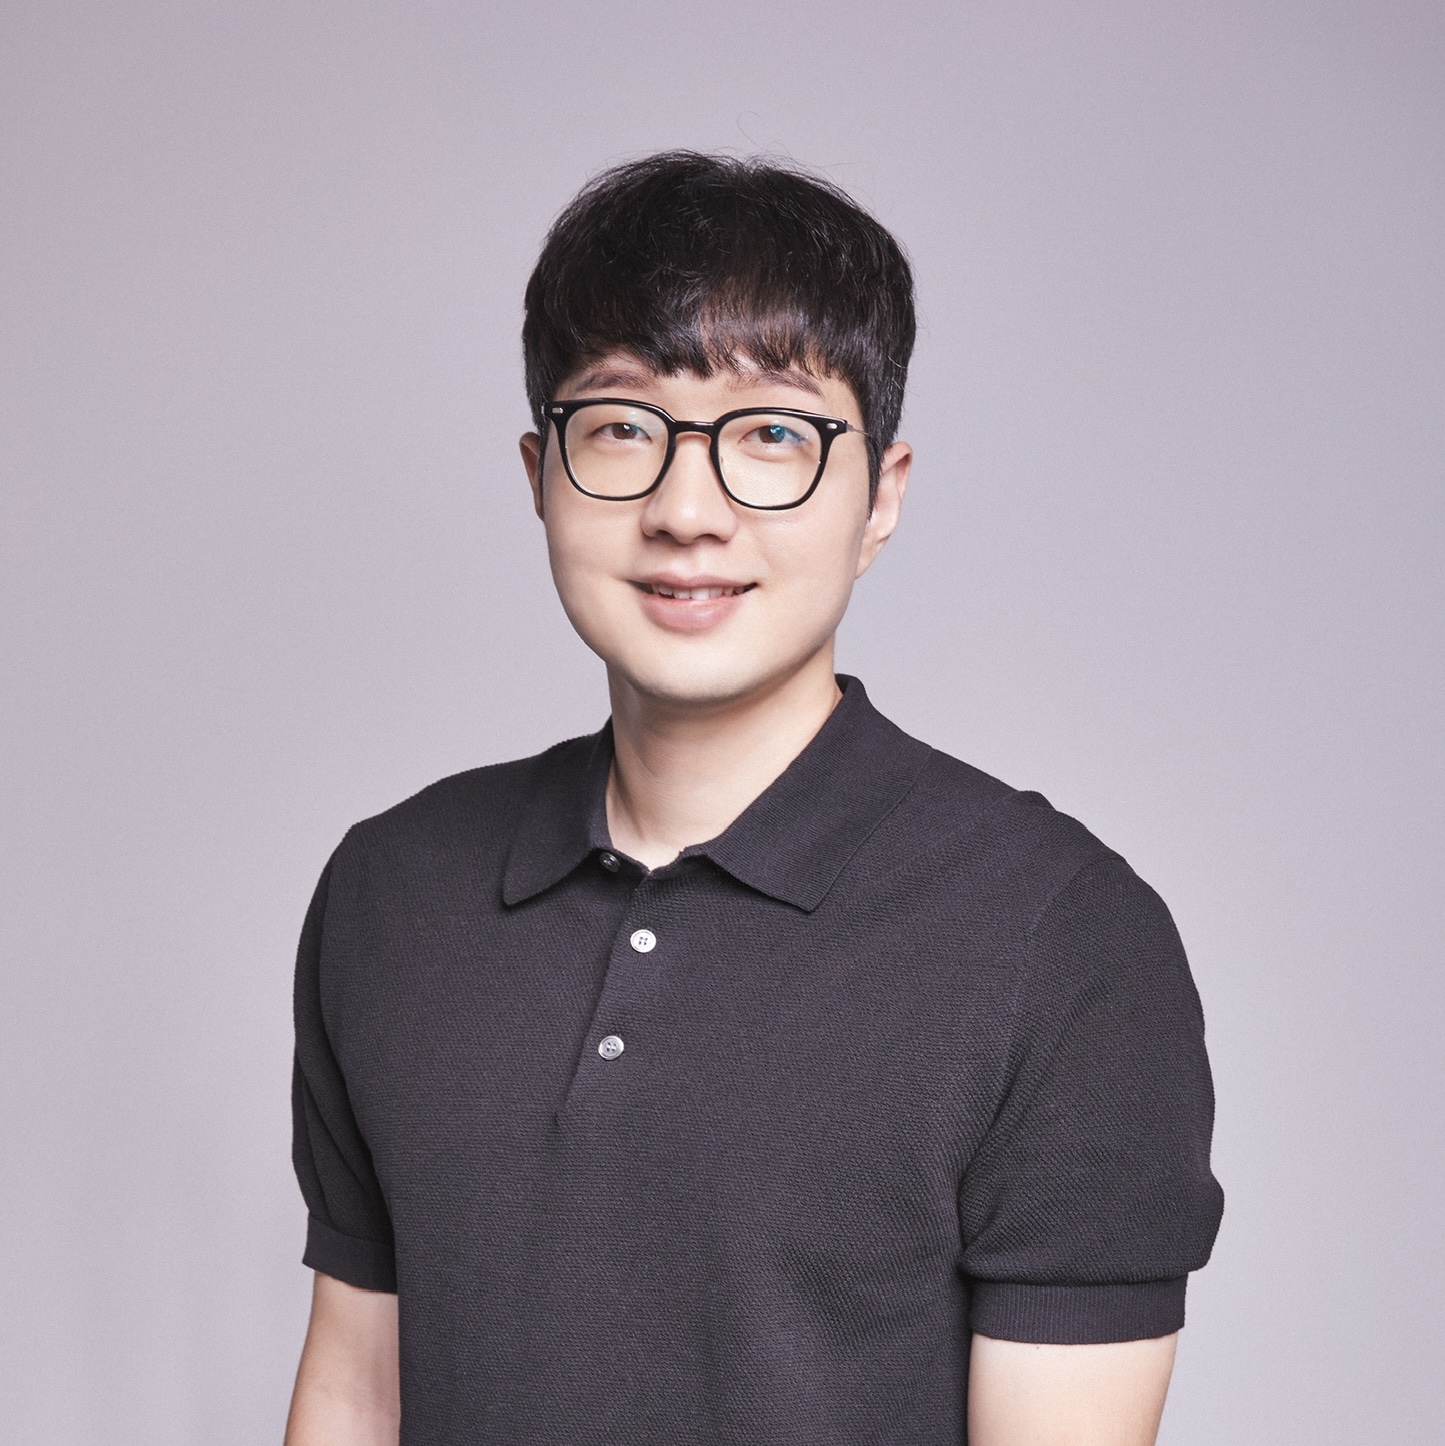 Kyueui (QE) Lee, PhD